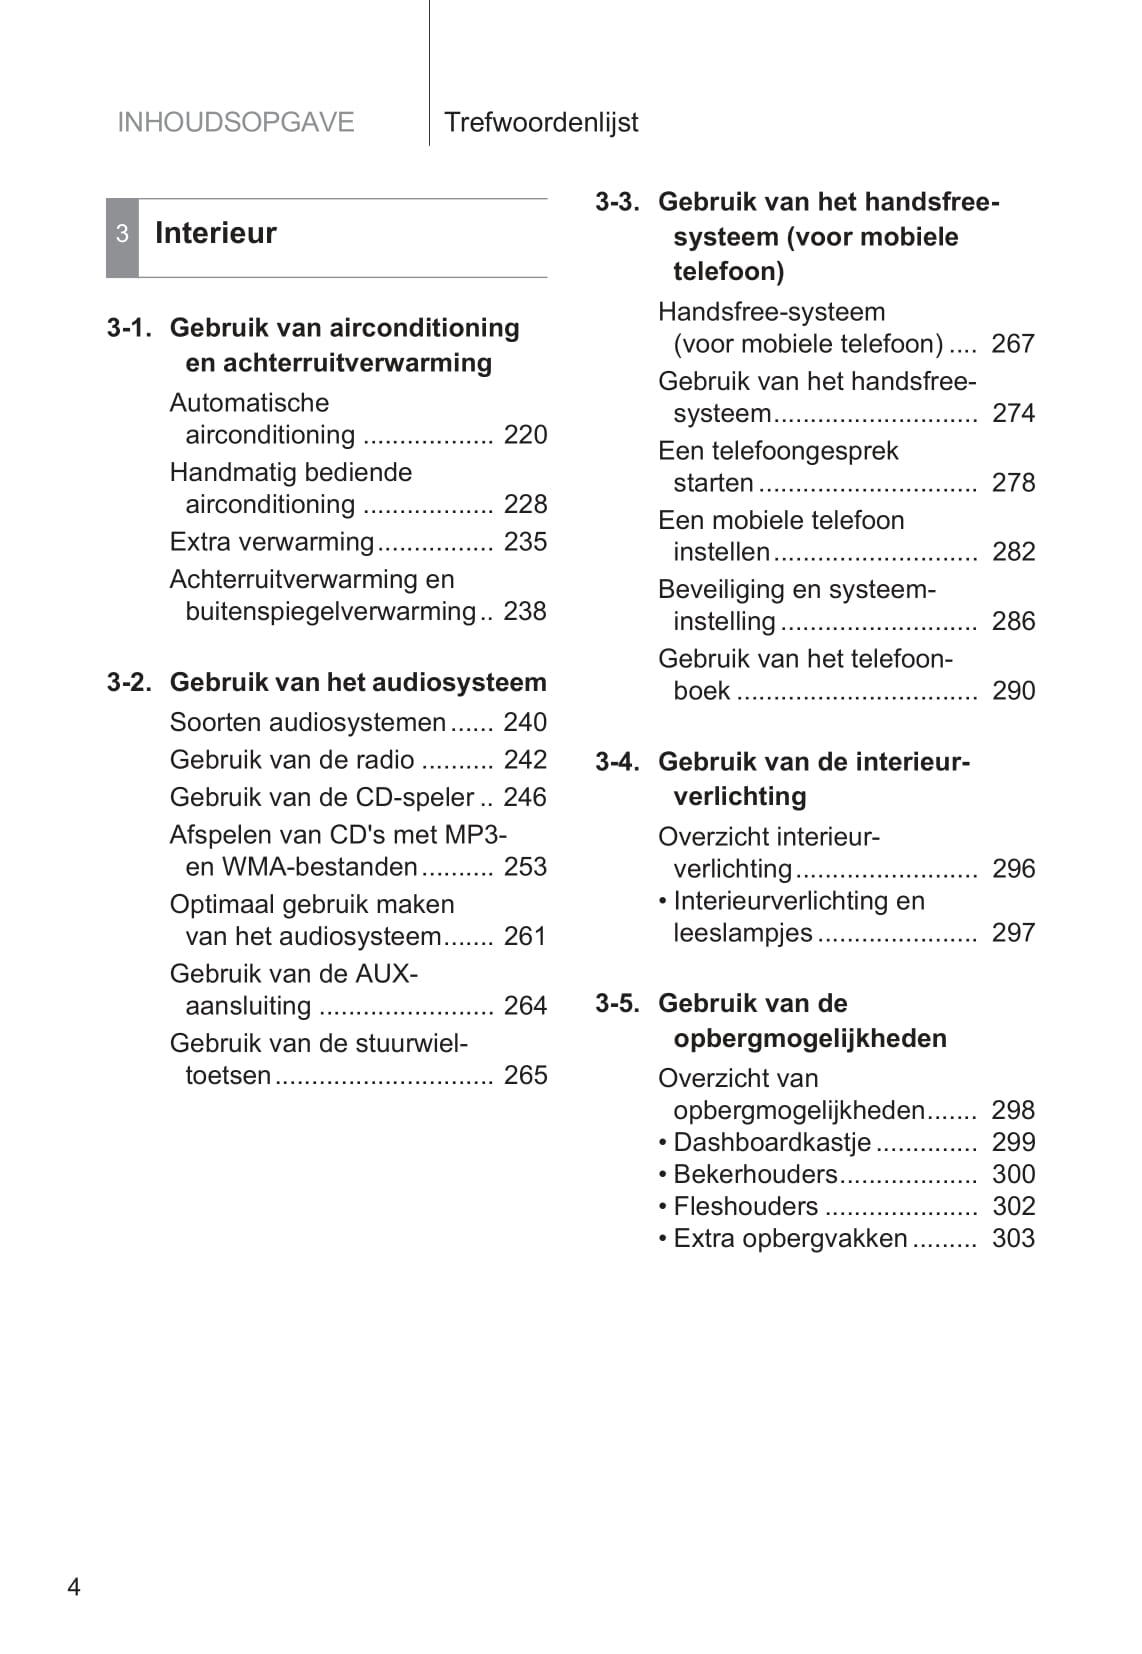 2009-2010 Toyota Urban Cruiser Owner's Manual | Dutch